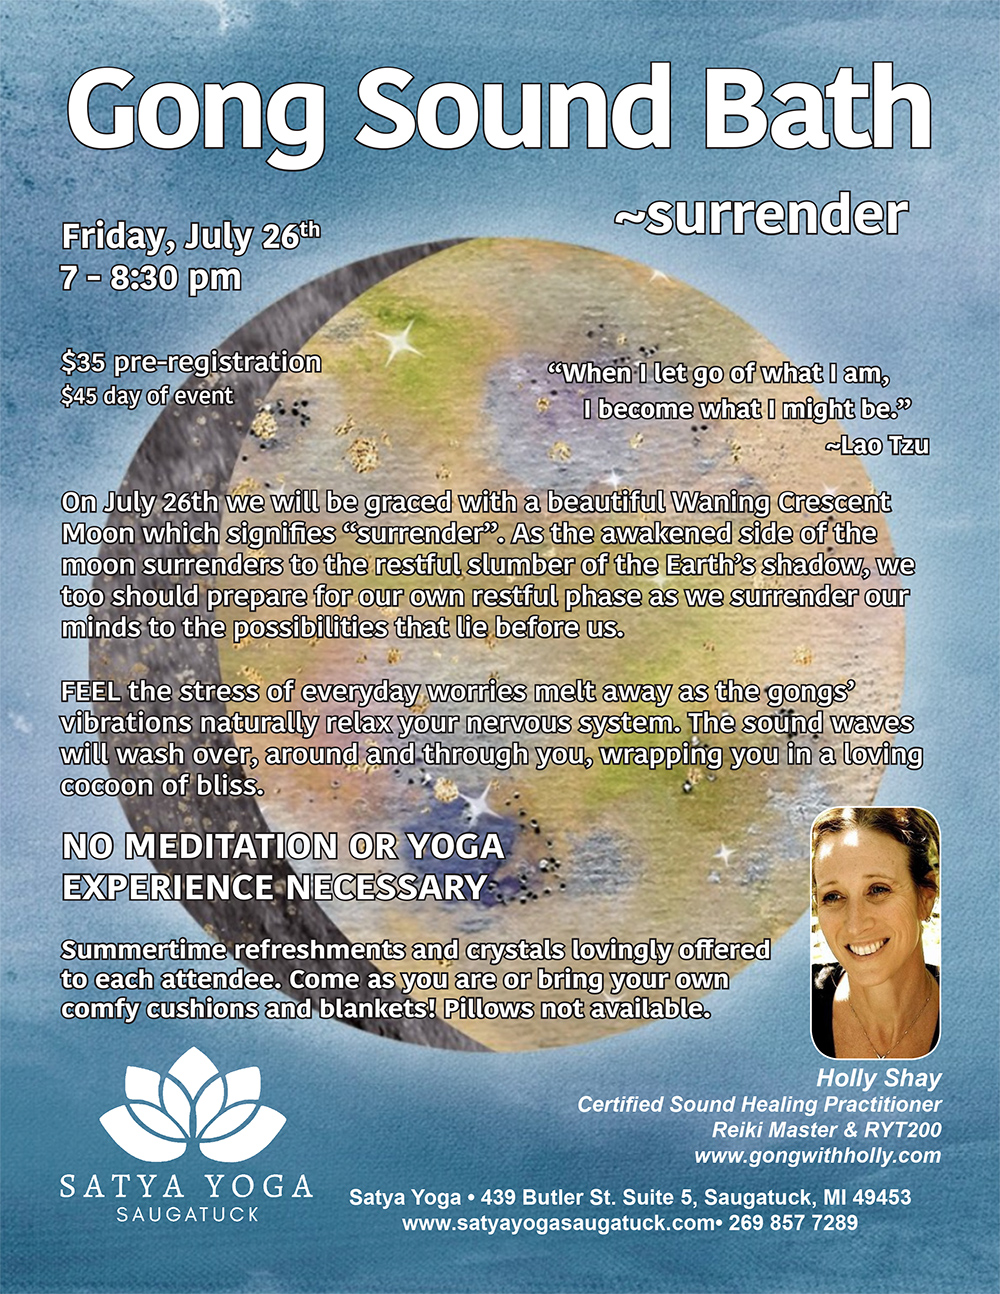 Gong Sound Bath, July 26, Satya Yoga, Saugatuck, MI